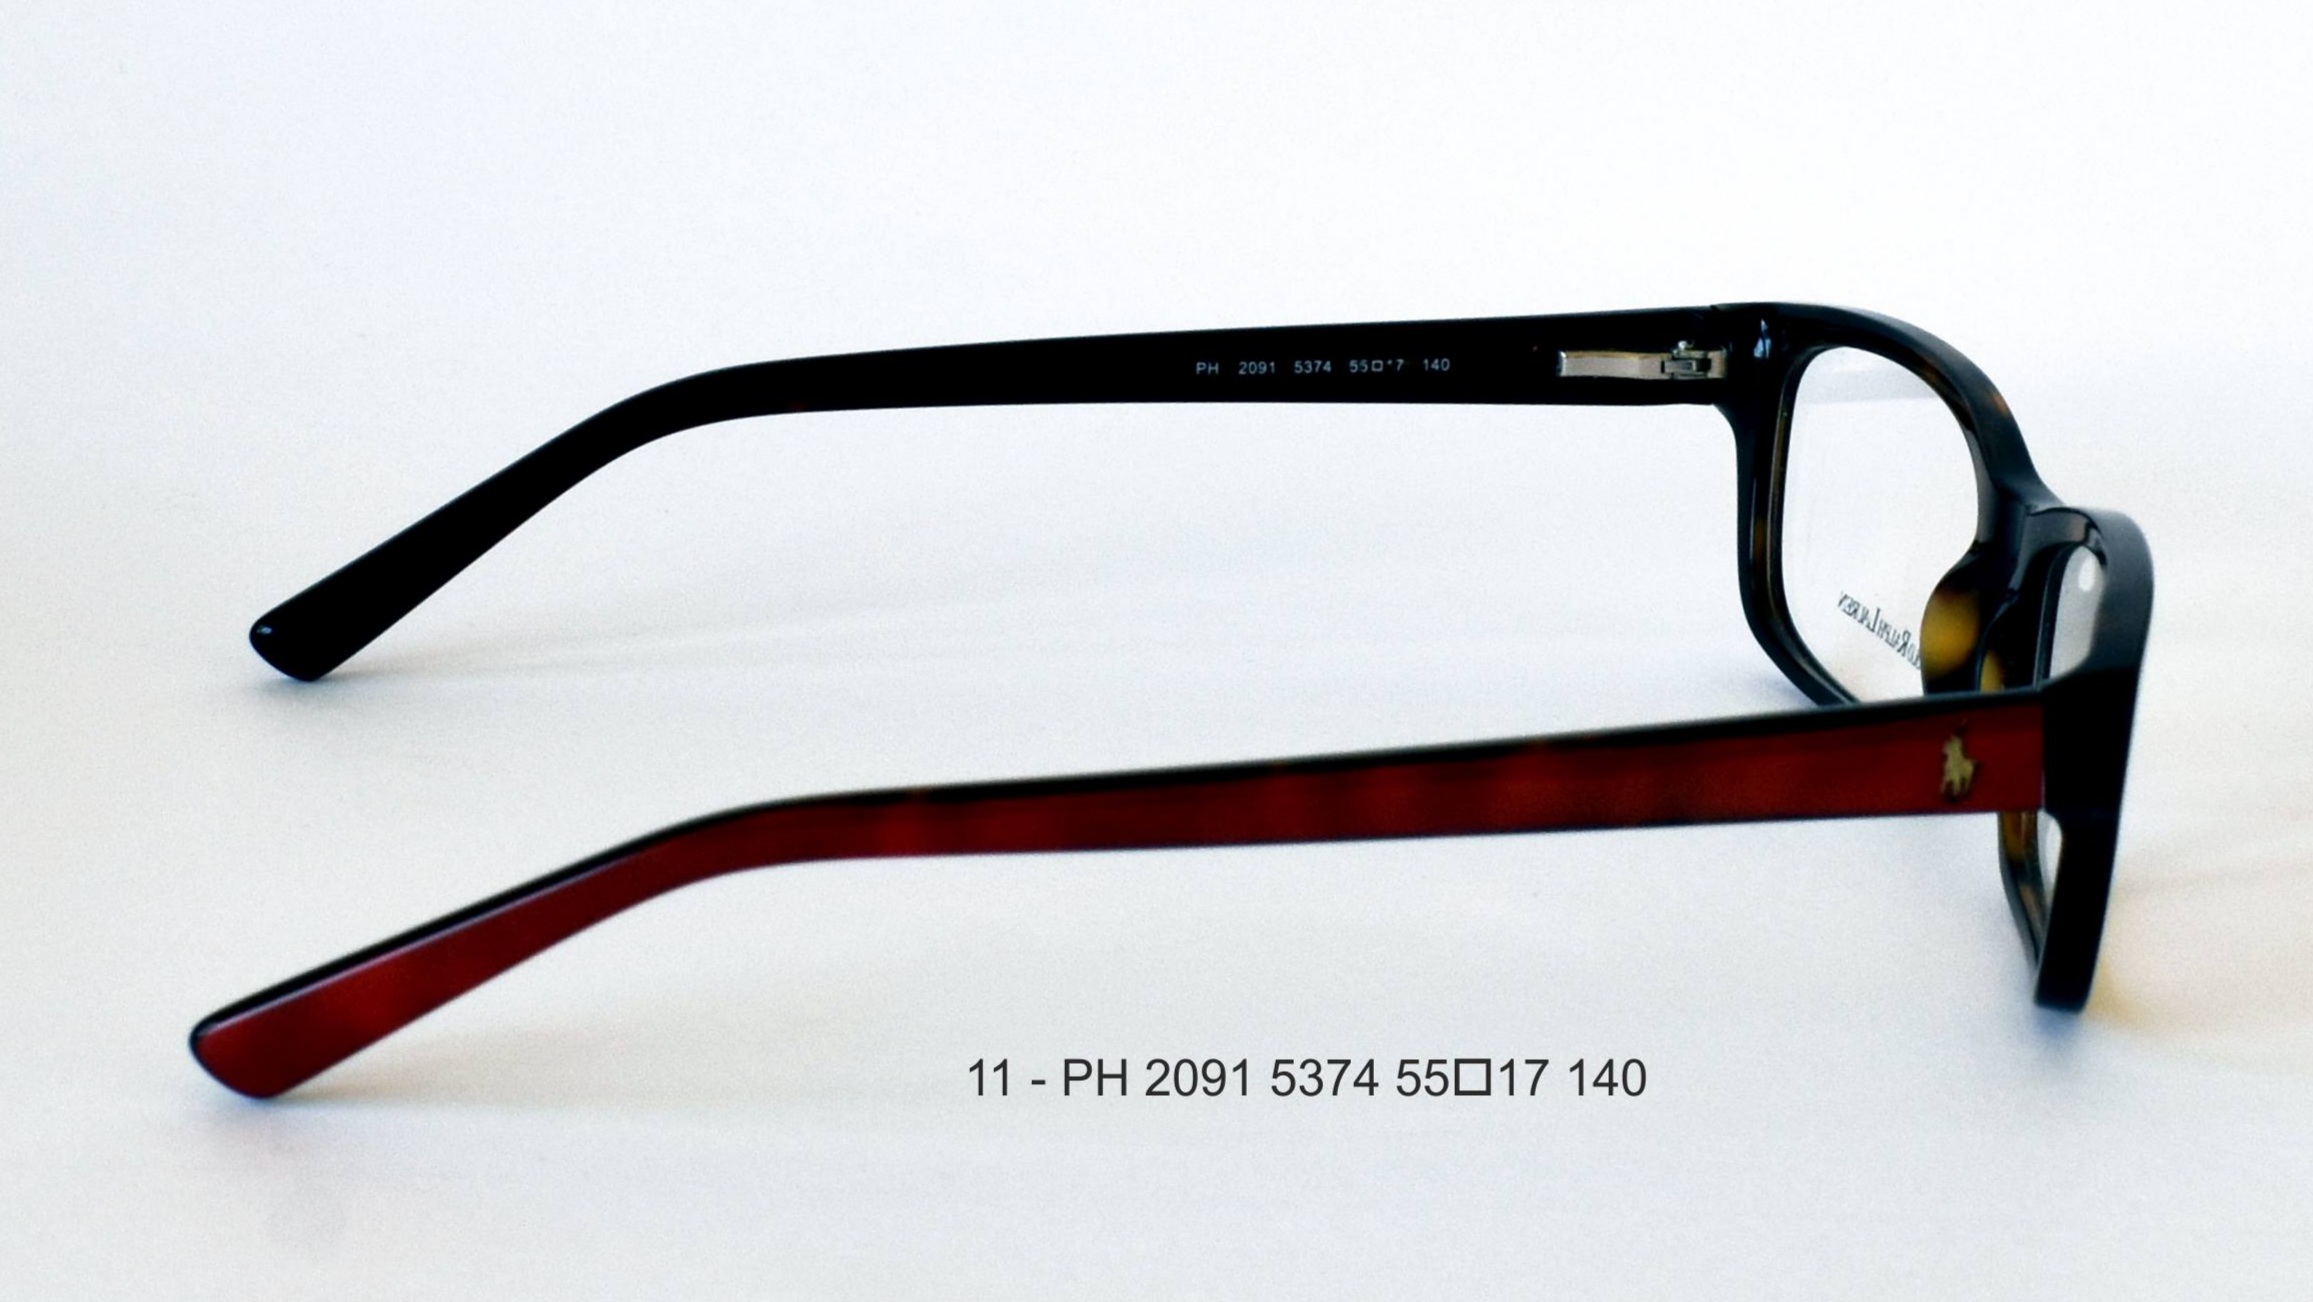 Montatura occhiali da vista RALPH LAUREN modello PH 2091 5374